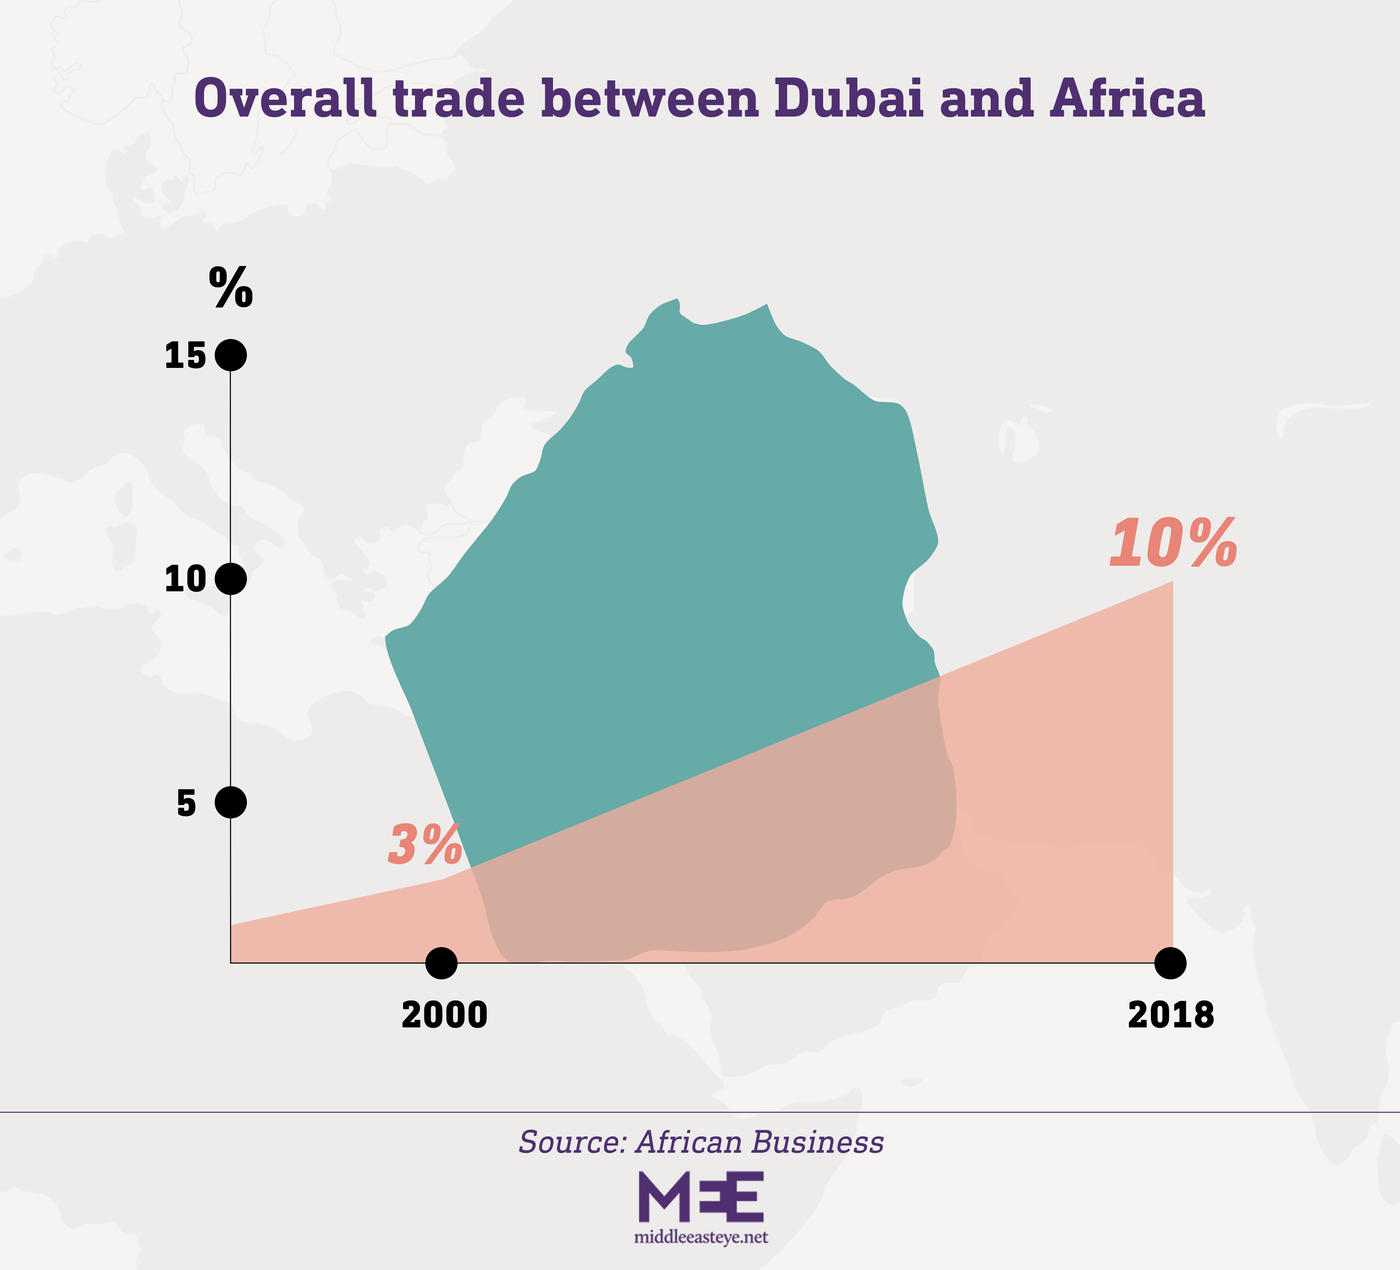 Trade increases between Dubai and Africa